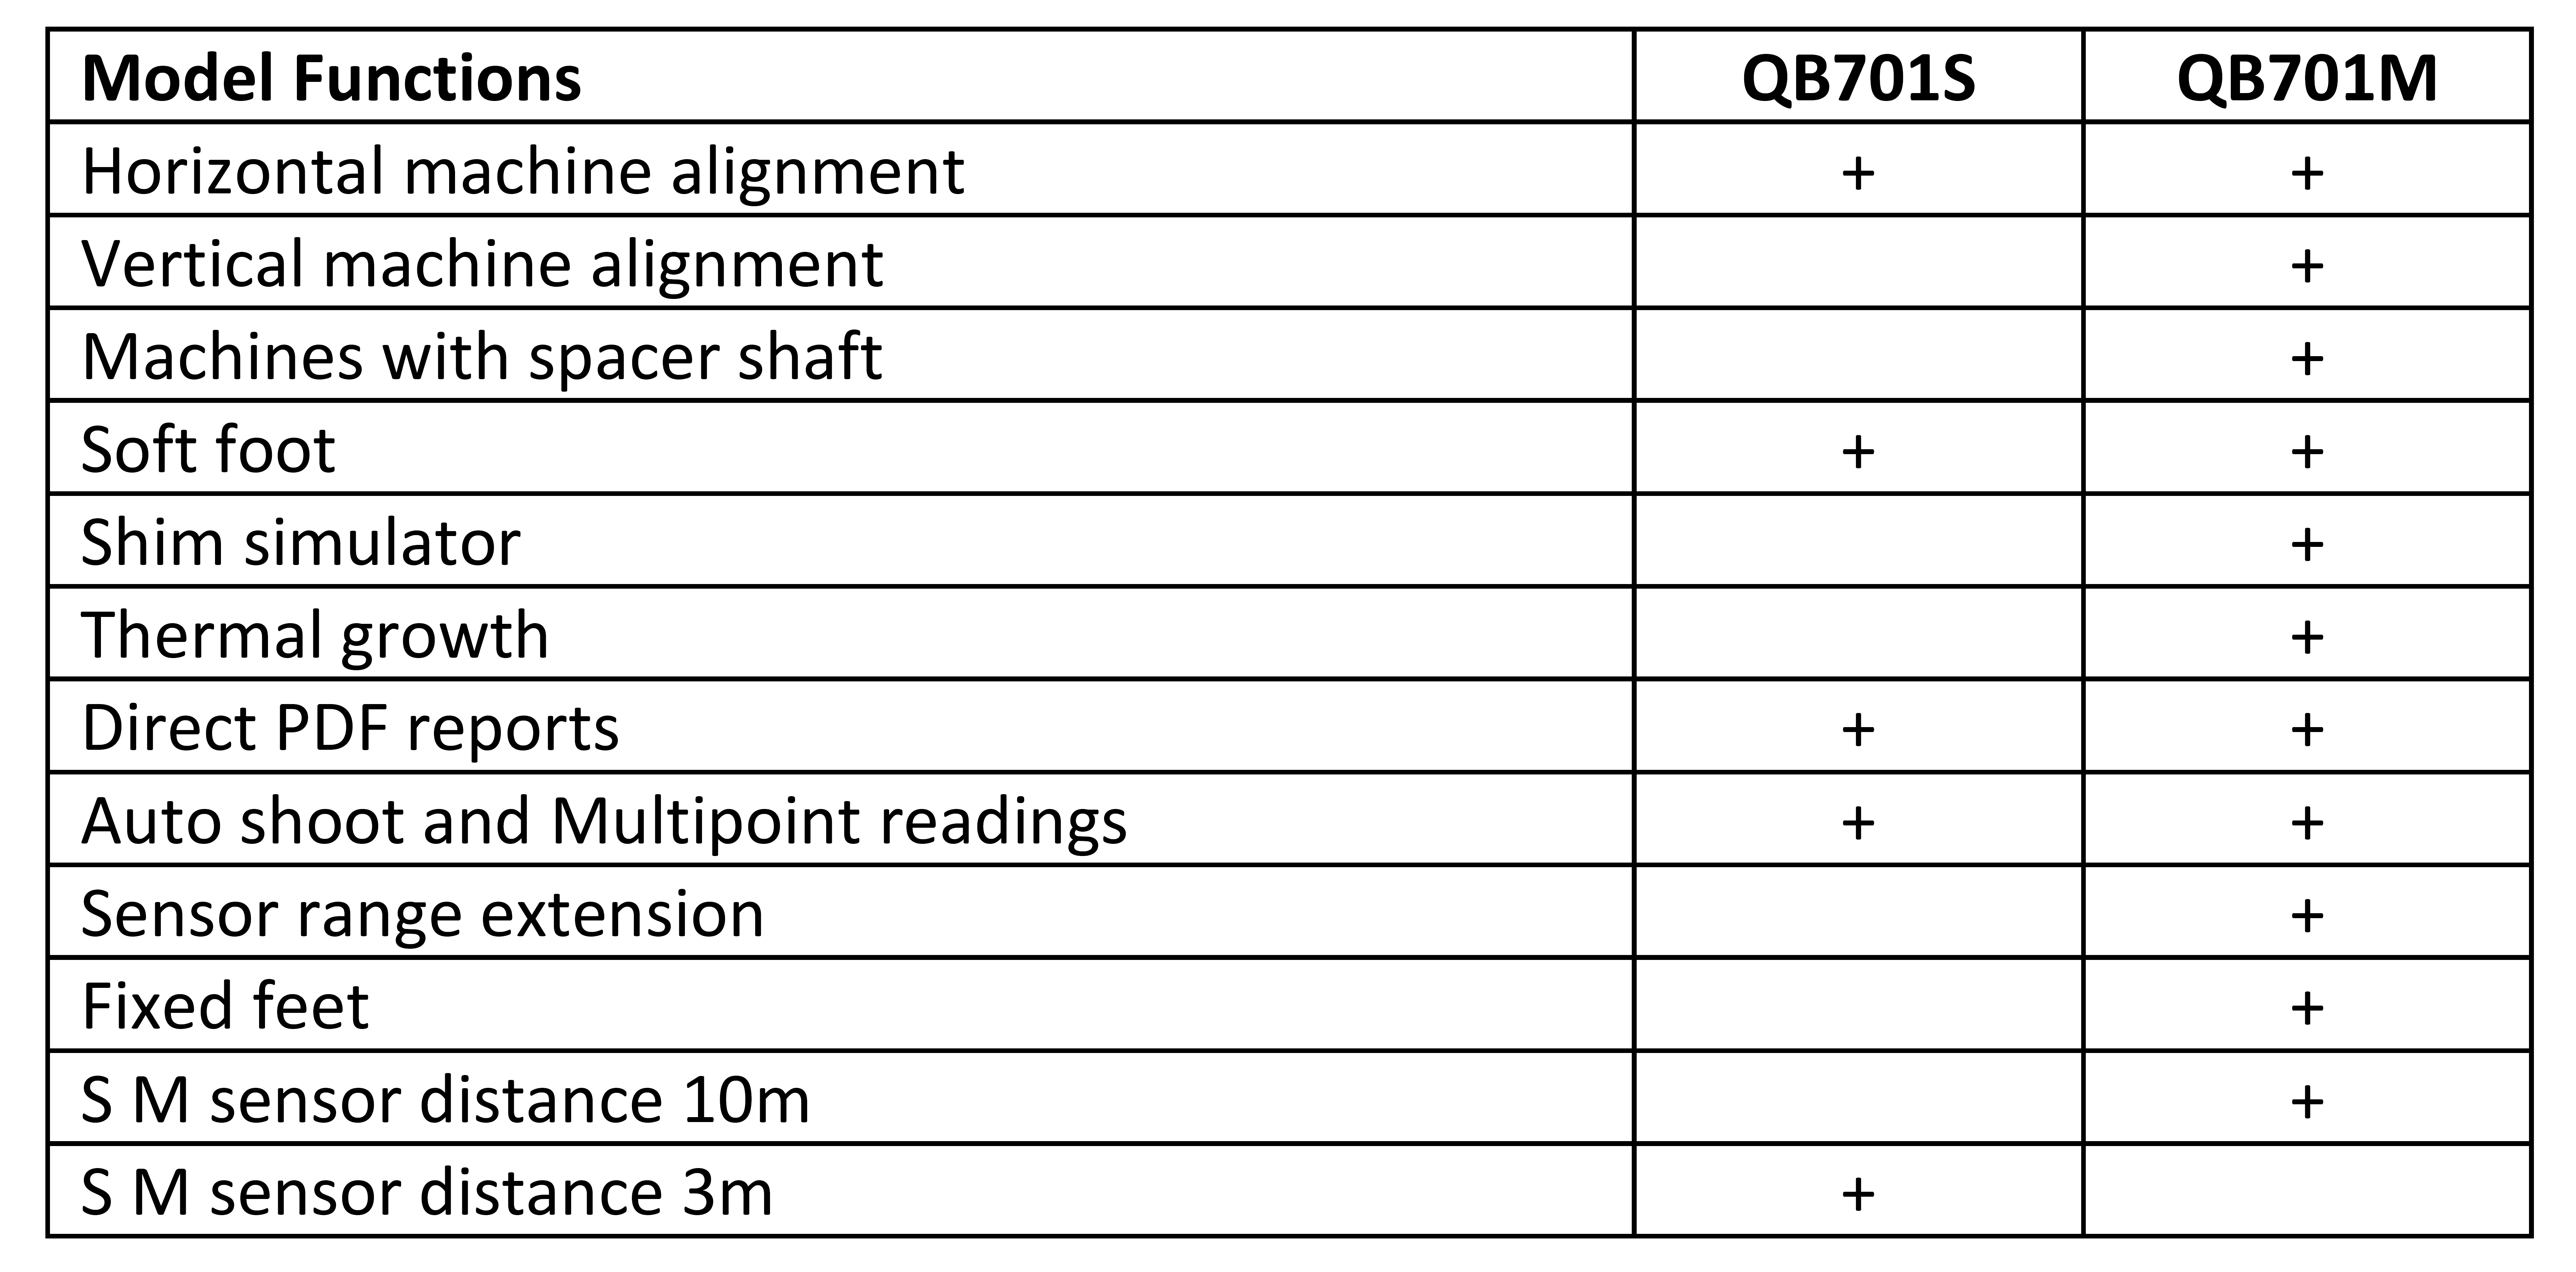 QB701 table 2022